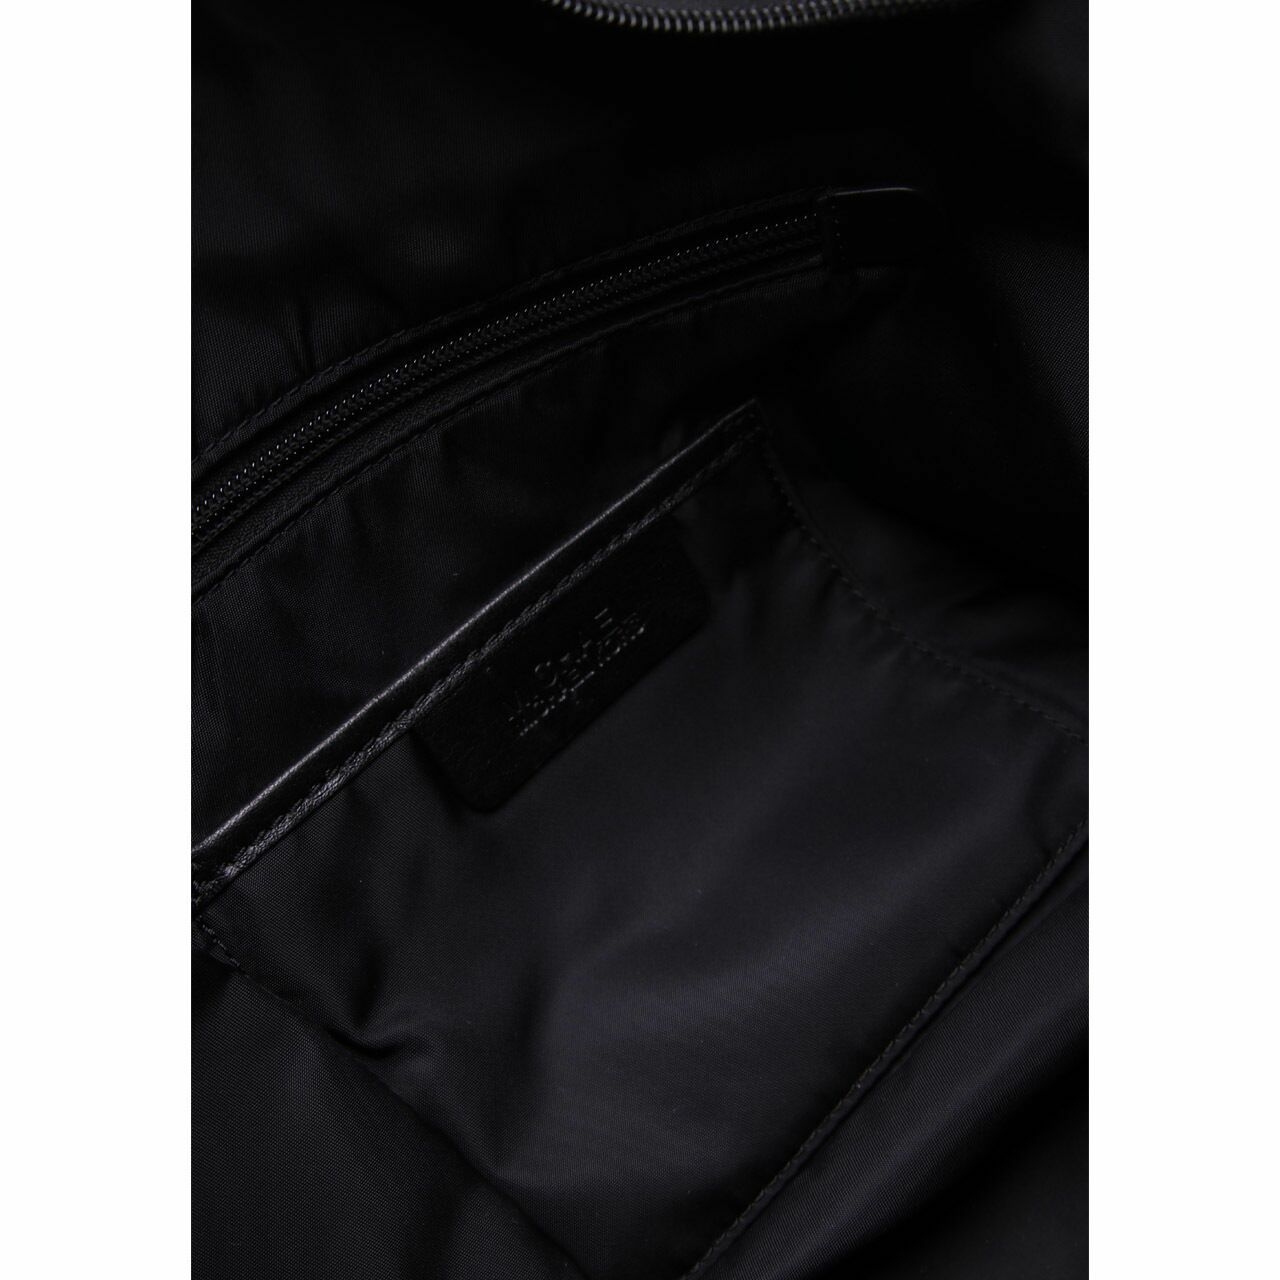 Michael Kors Black Nylon Morgan Large Tote Bag